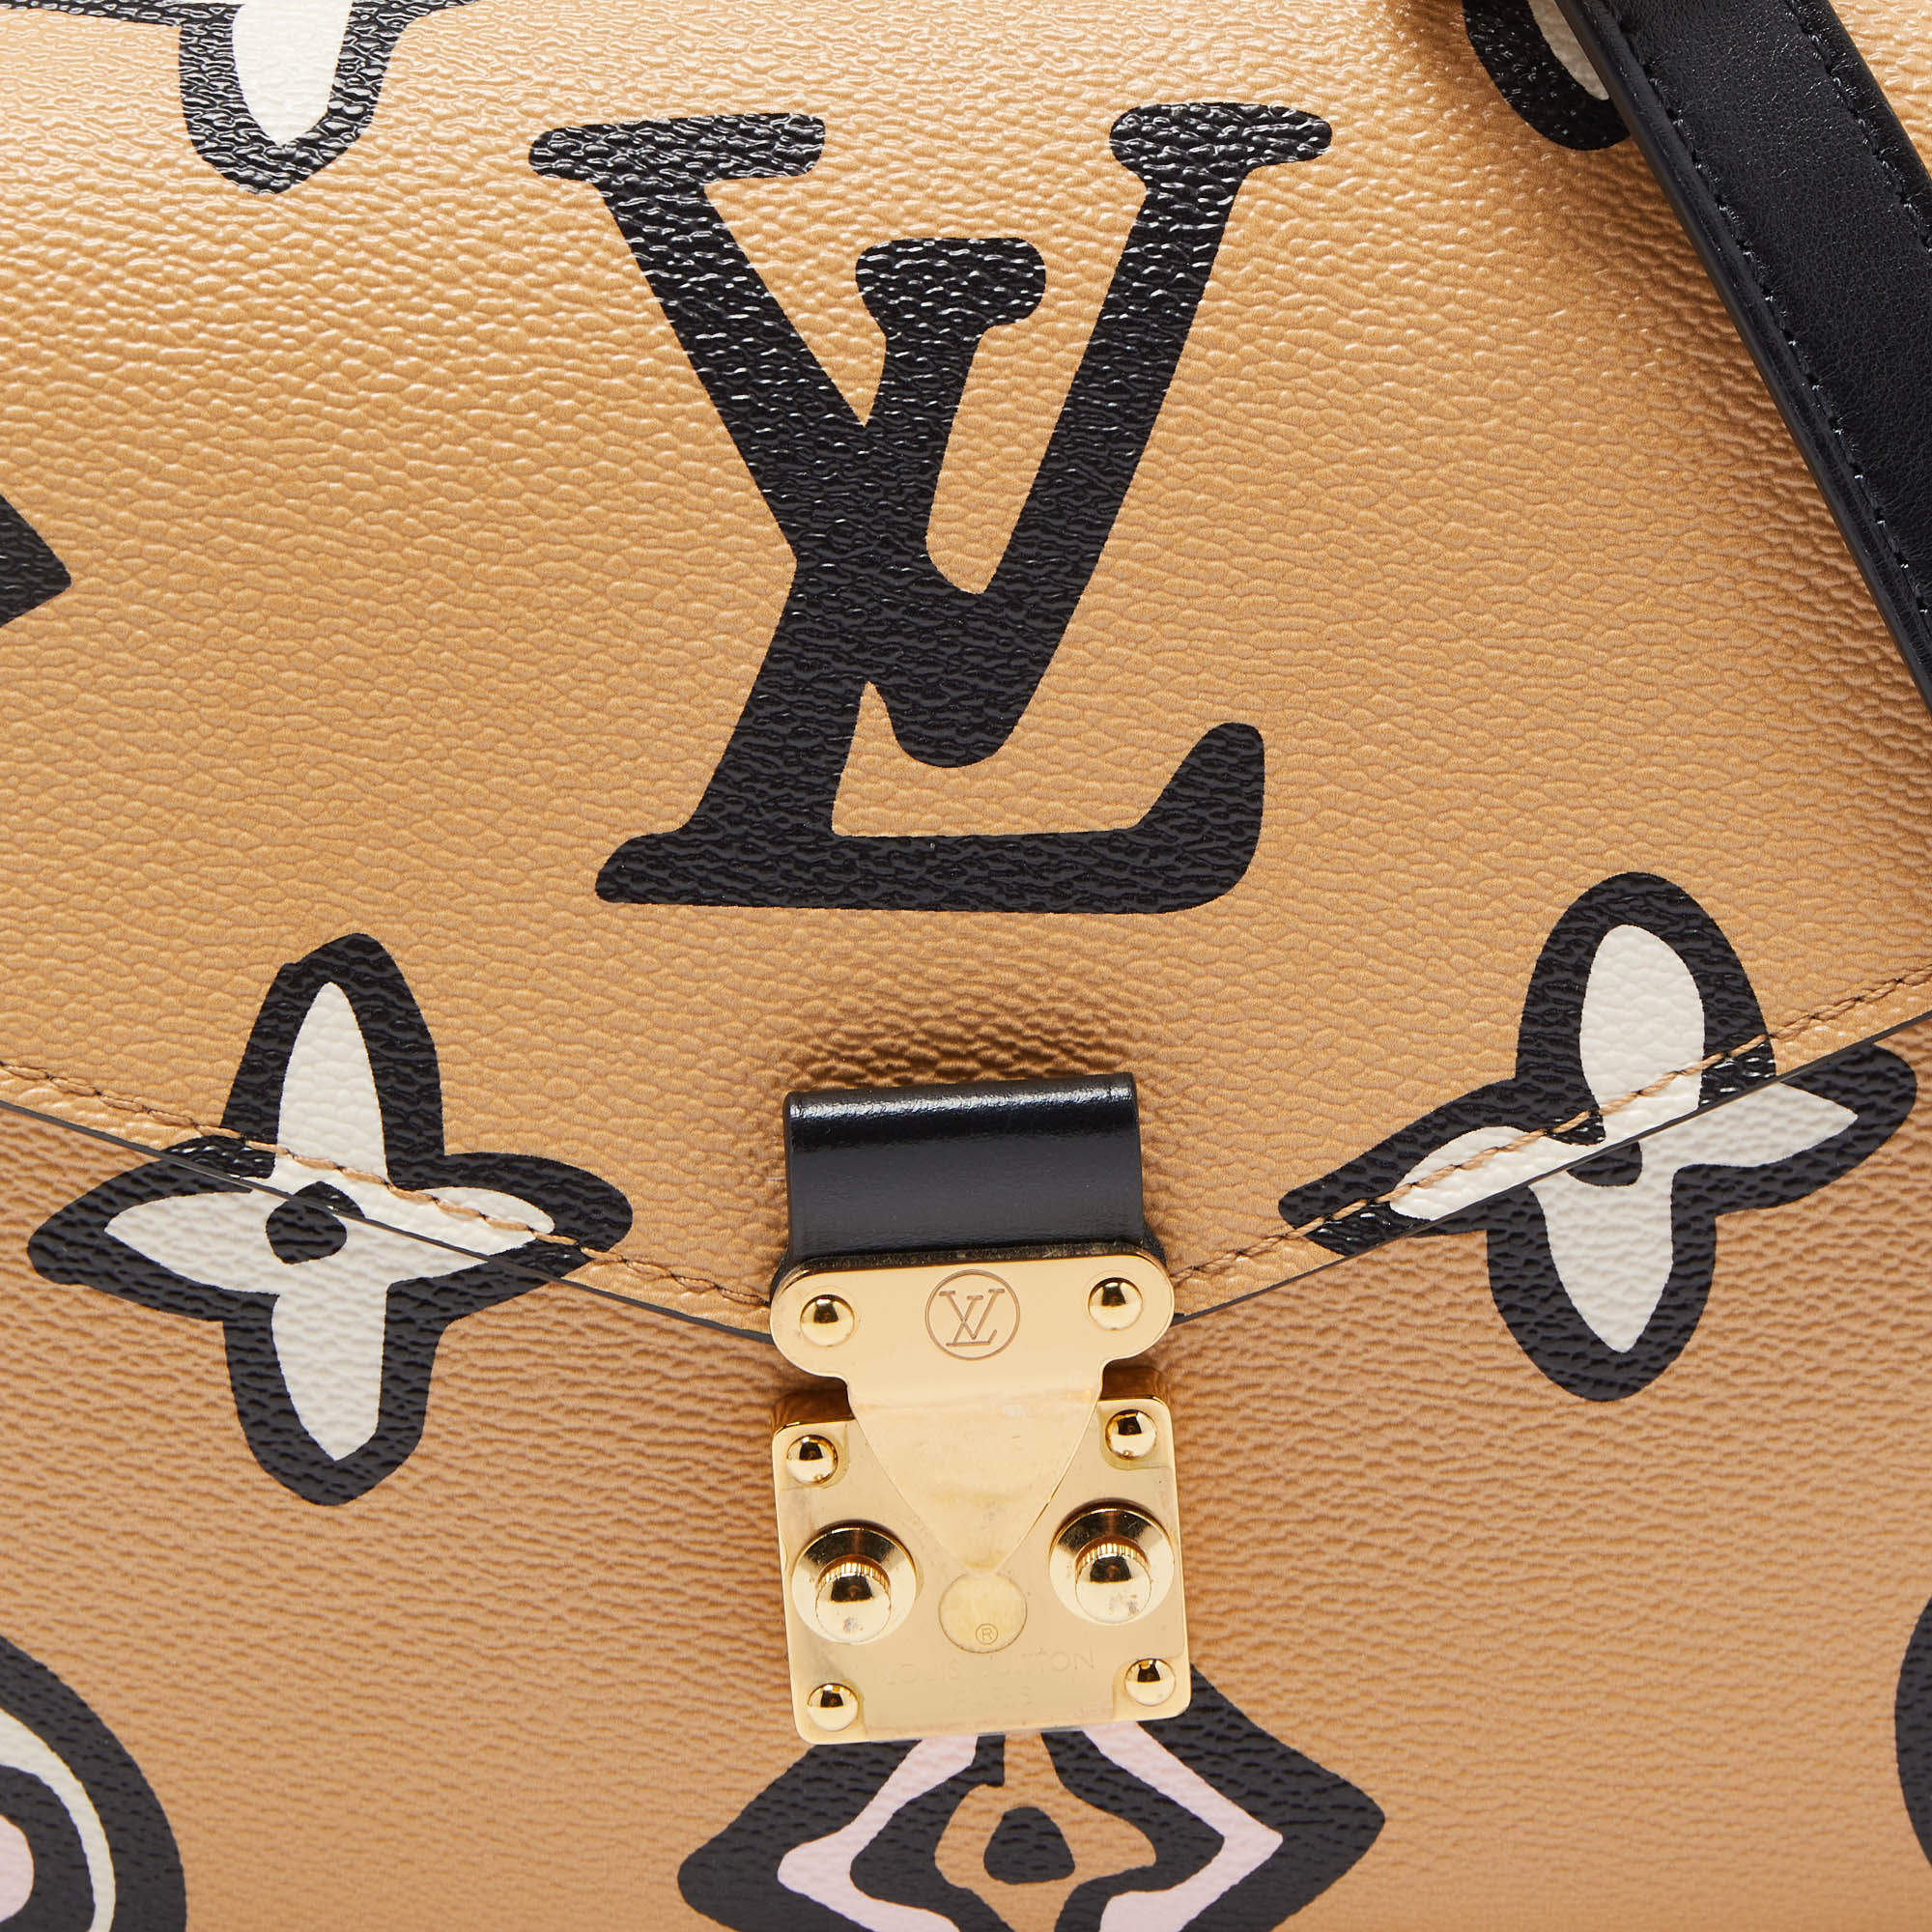 Louis Vuitton Pochette Metis MM Arizona Monogram Wild at Heart